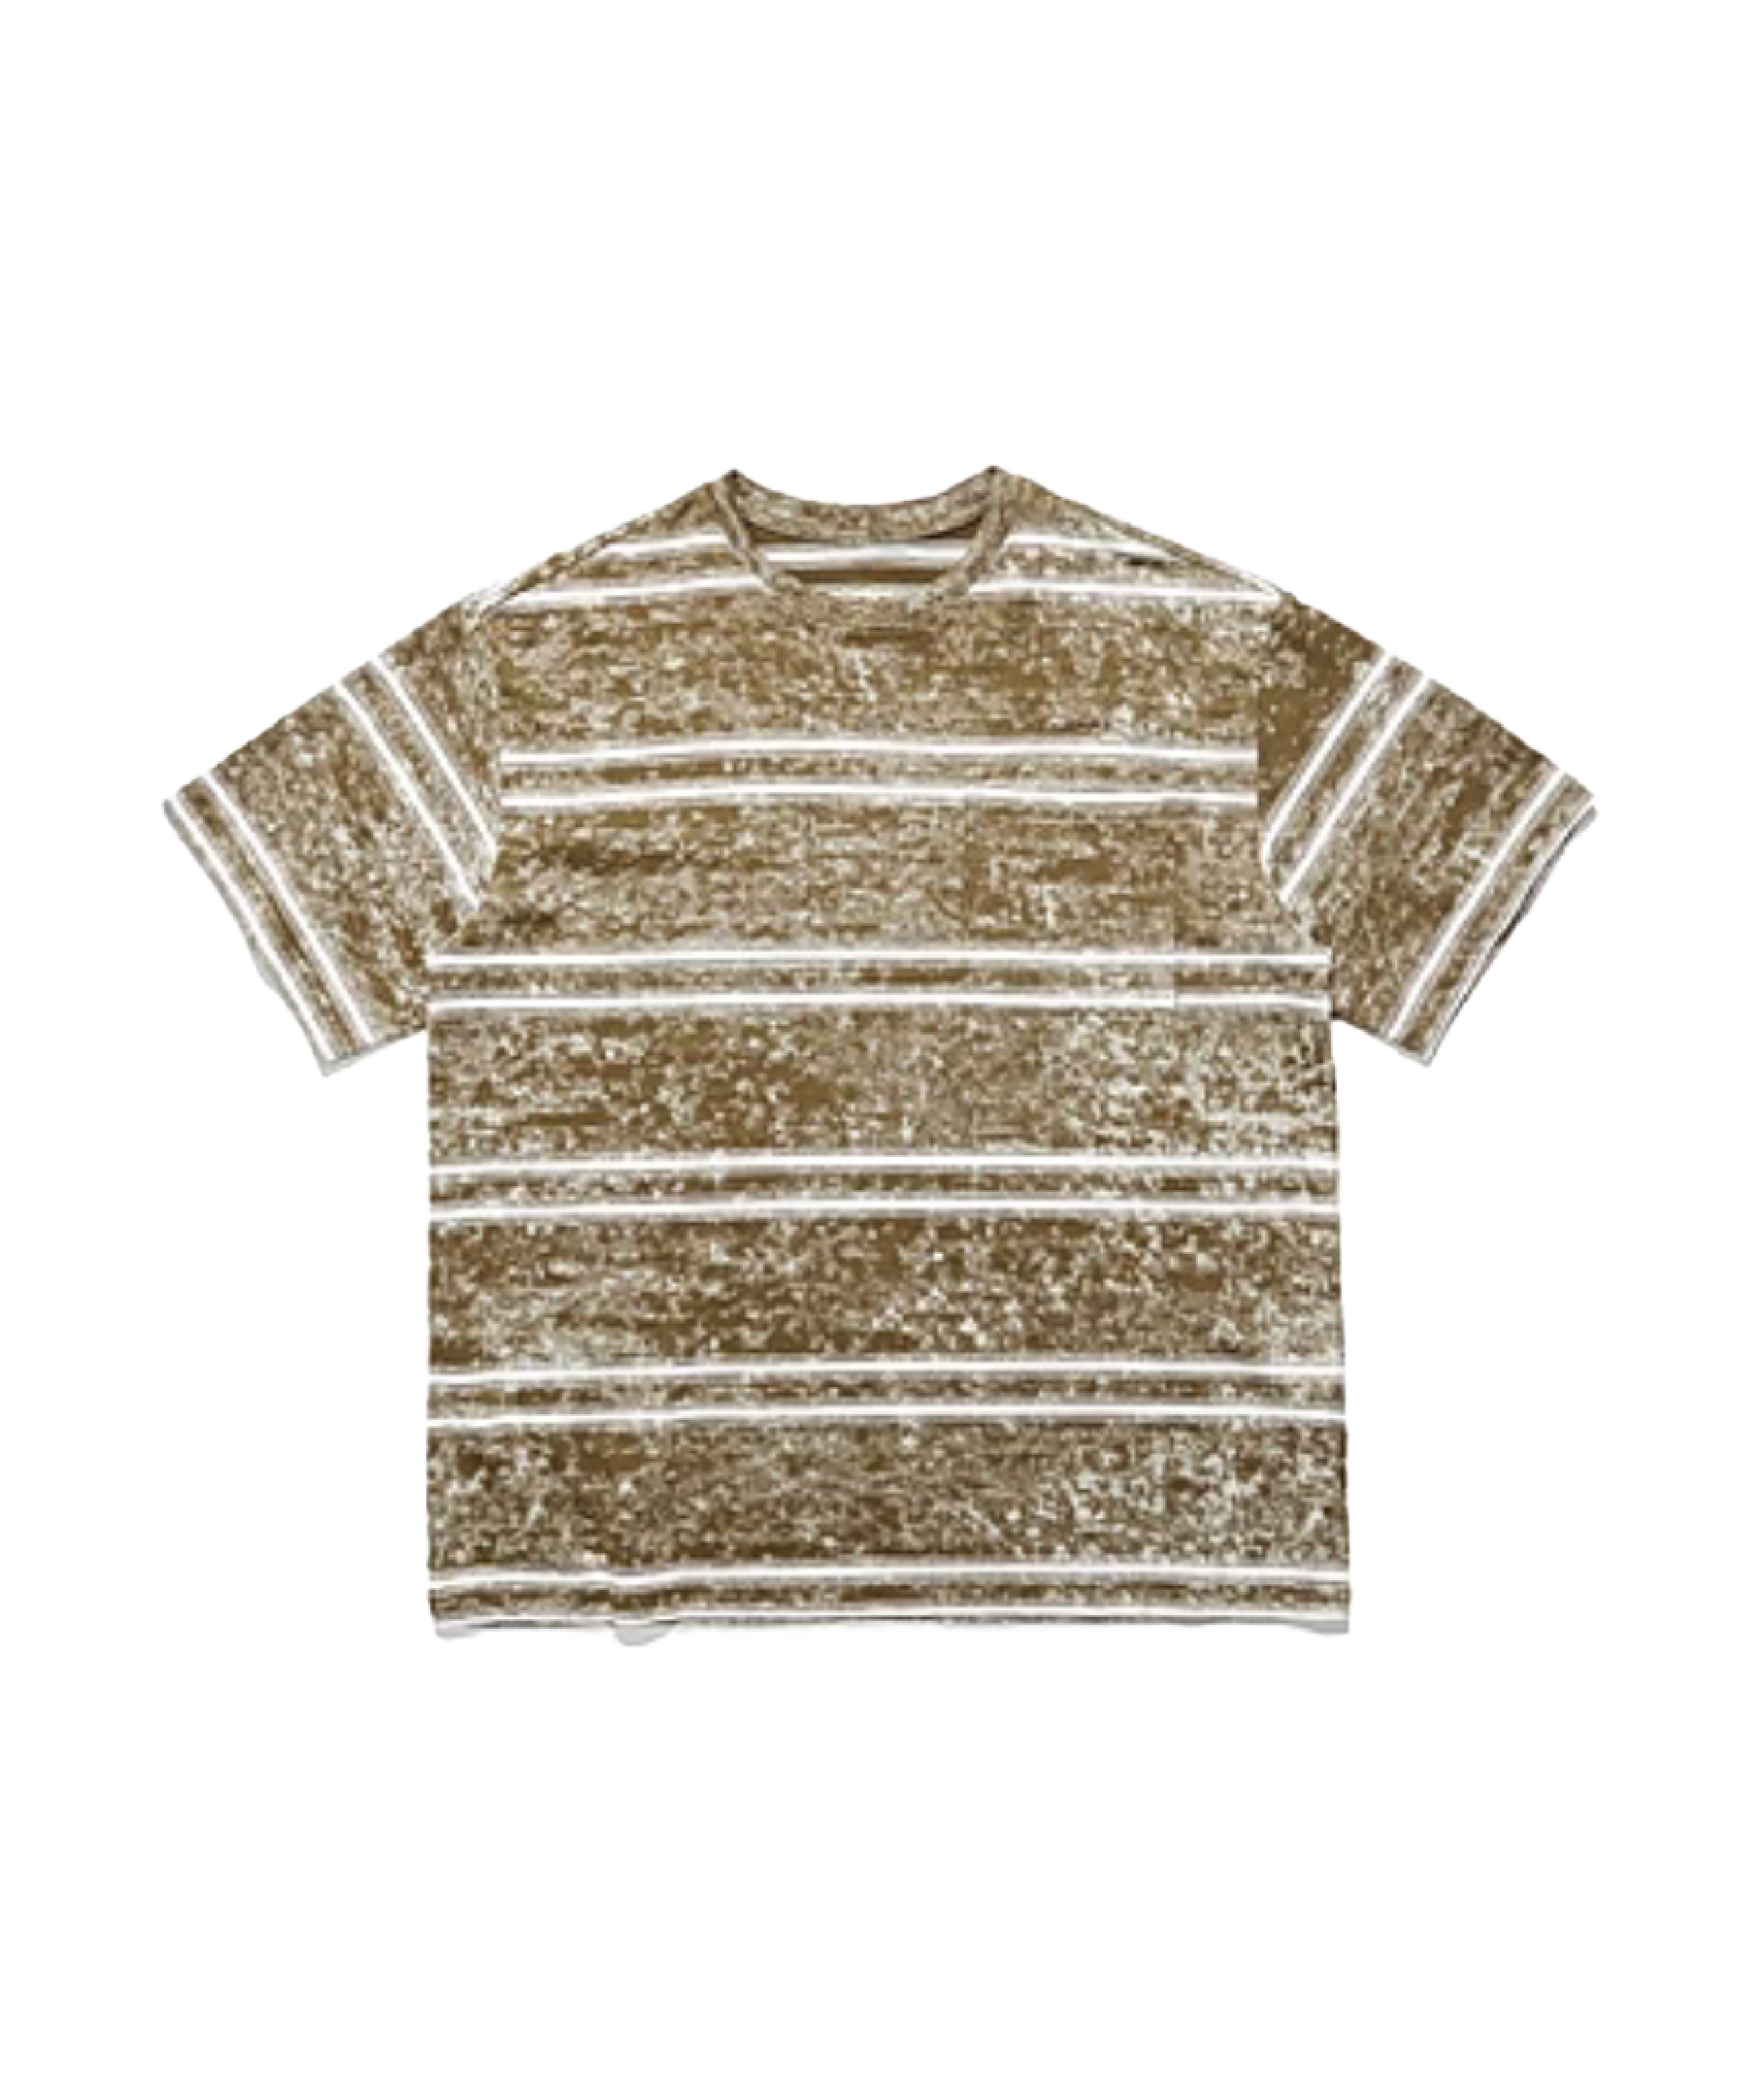 Causal Stripe T-shirt